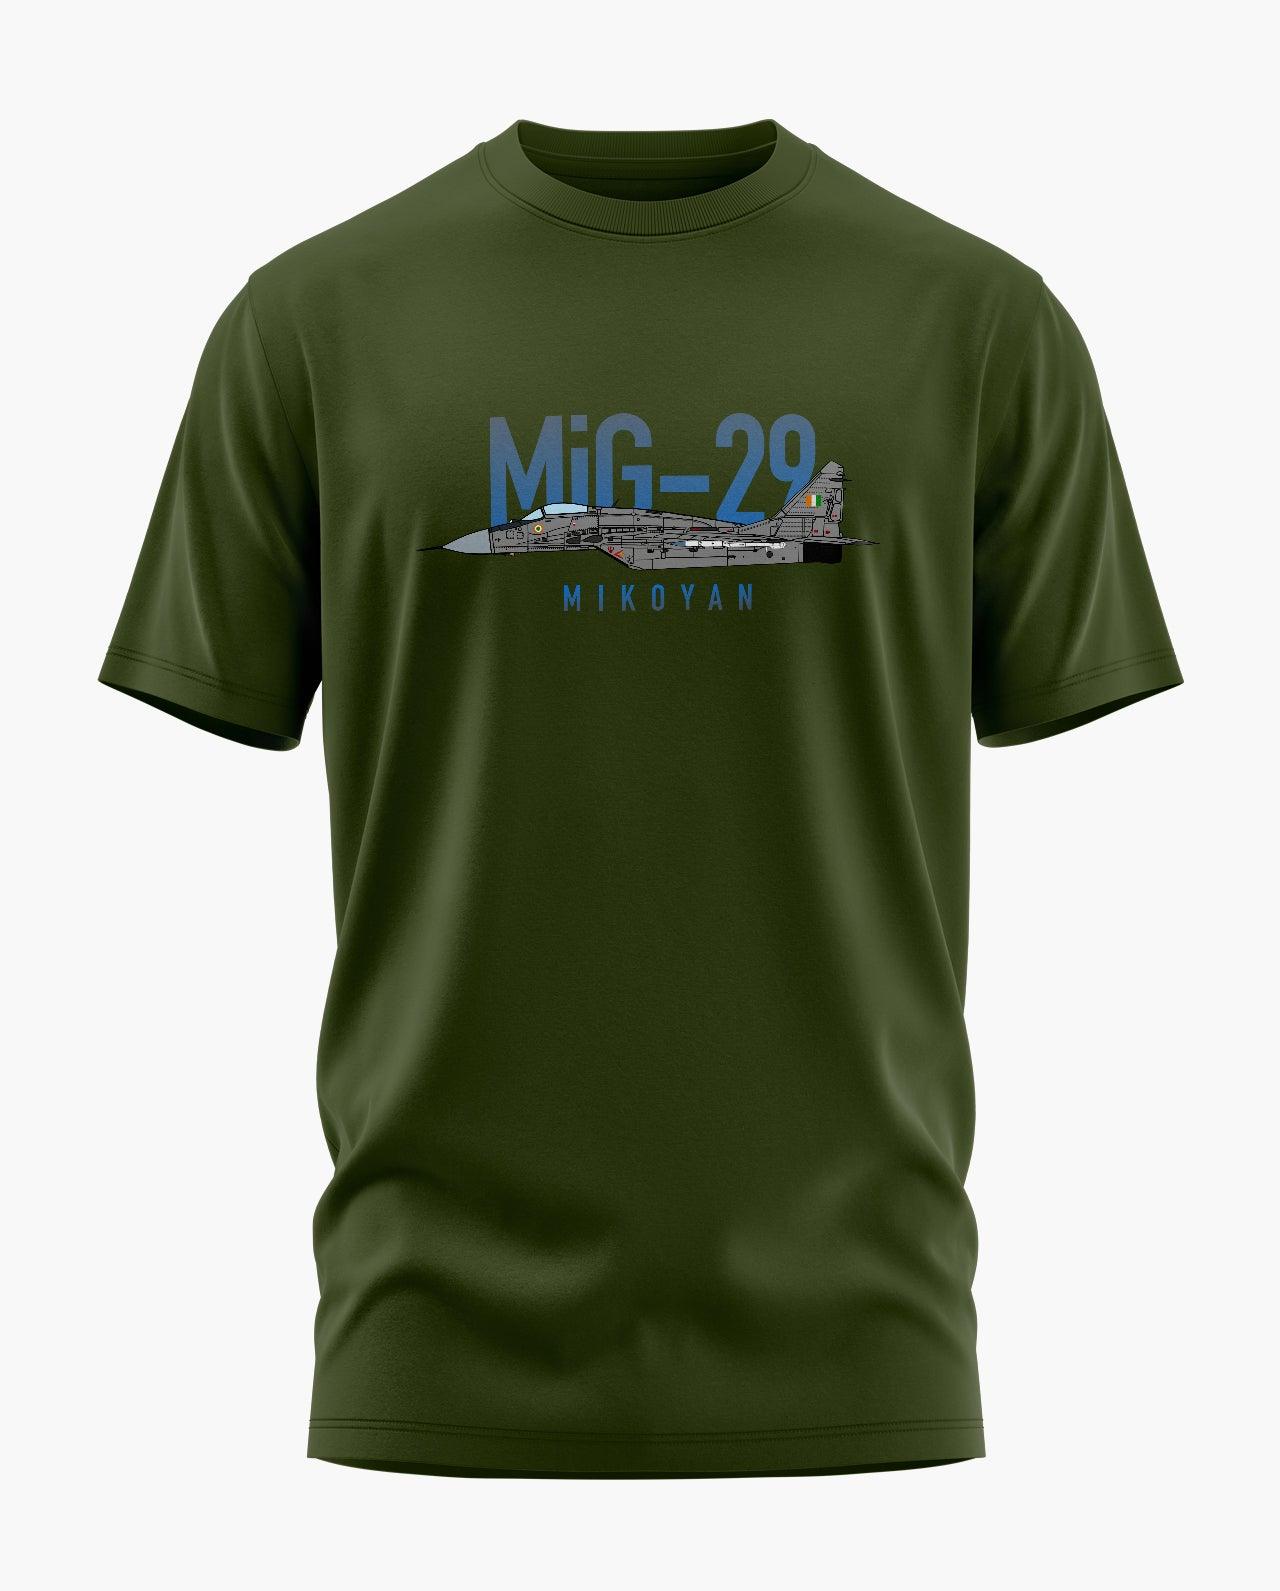 MiG 29 T-Shirt - Aero Armour